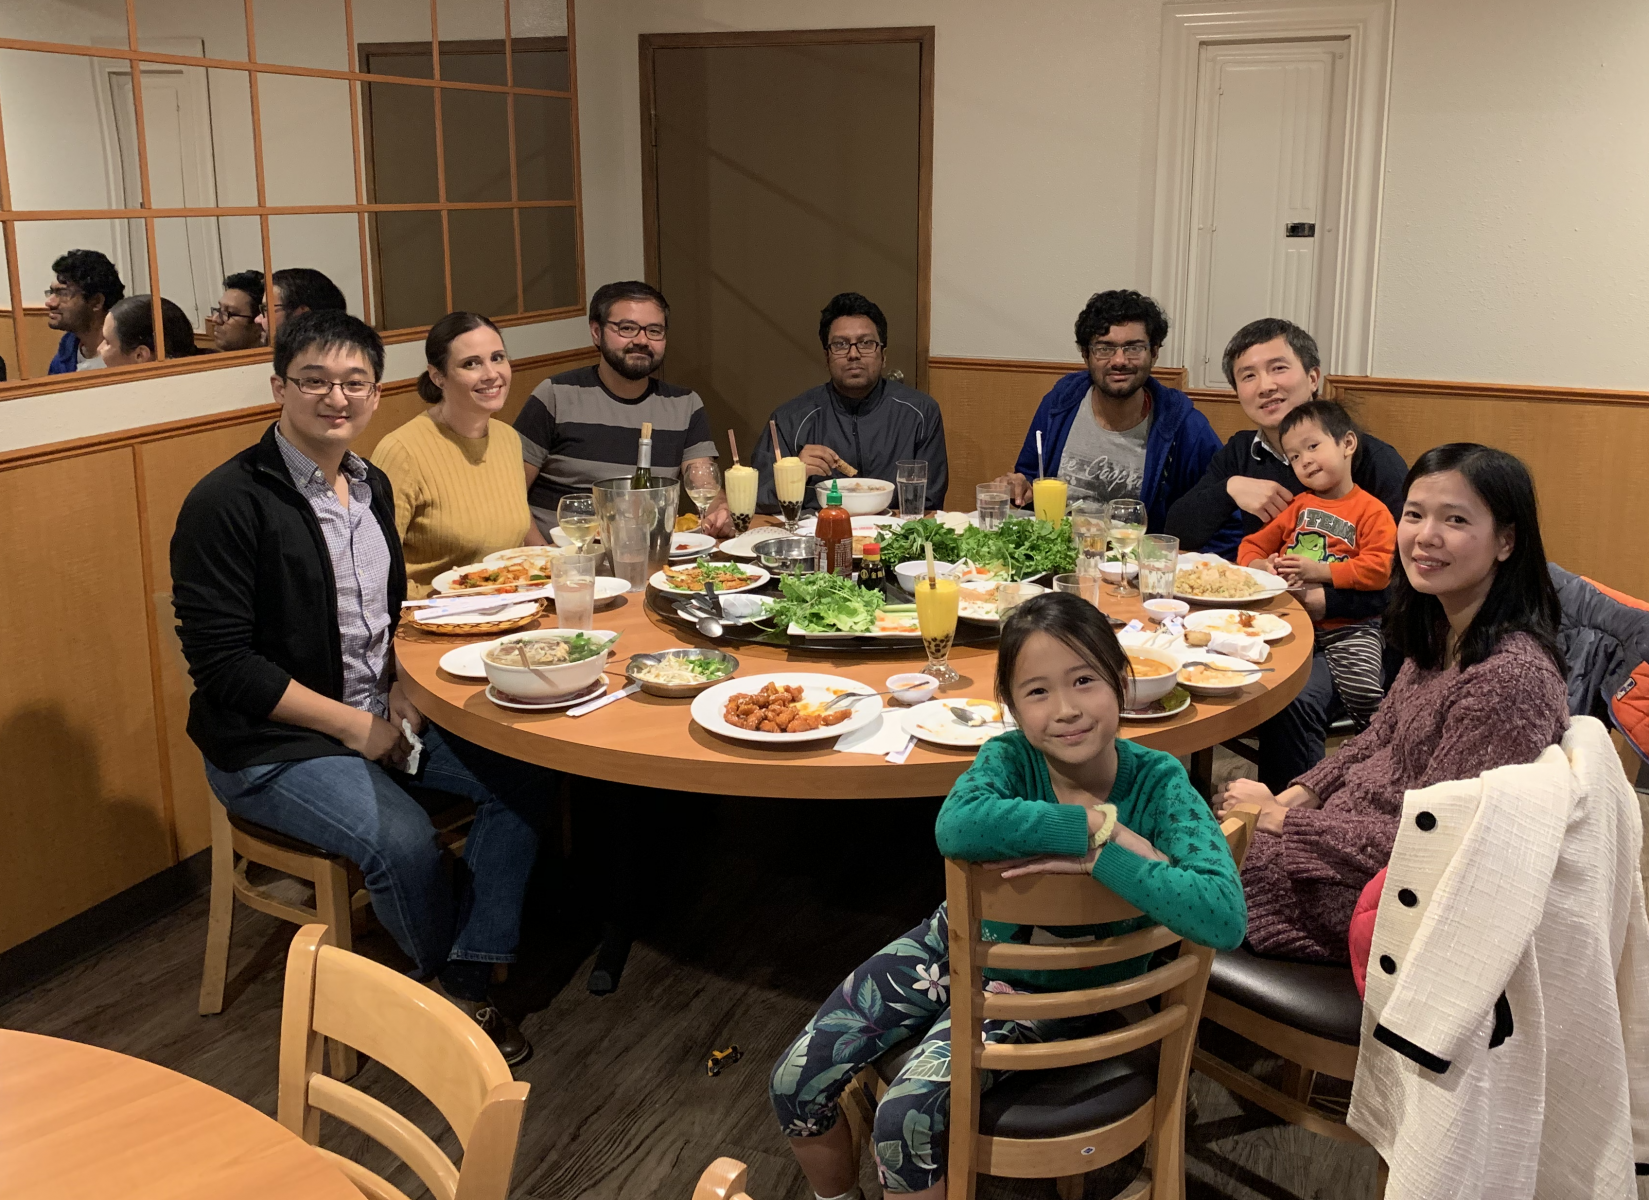 20191220 - First dinner party in San Diego at Phuong Trang Restaurant - Roger, Molly, Casey, Ratul, Tirtho, Hanh-Phuc, Zuny, Silvie, Min.